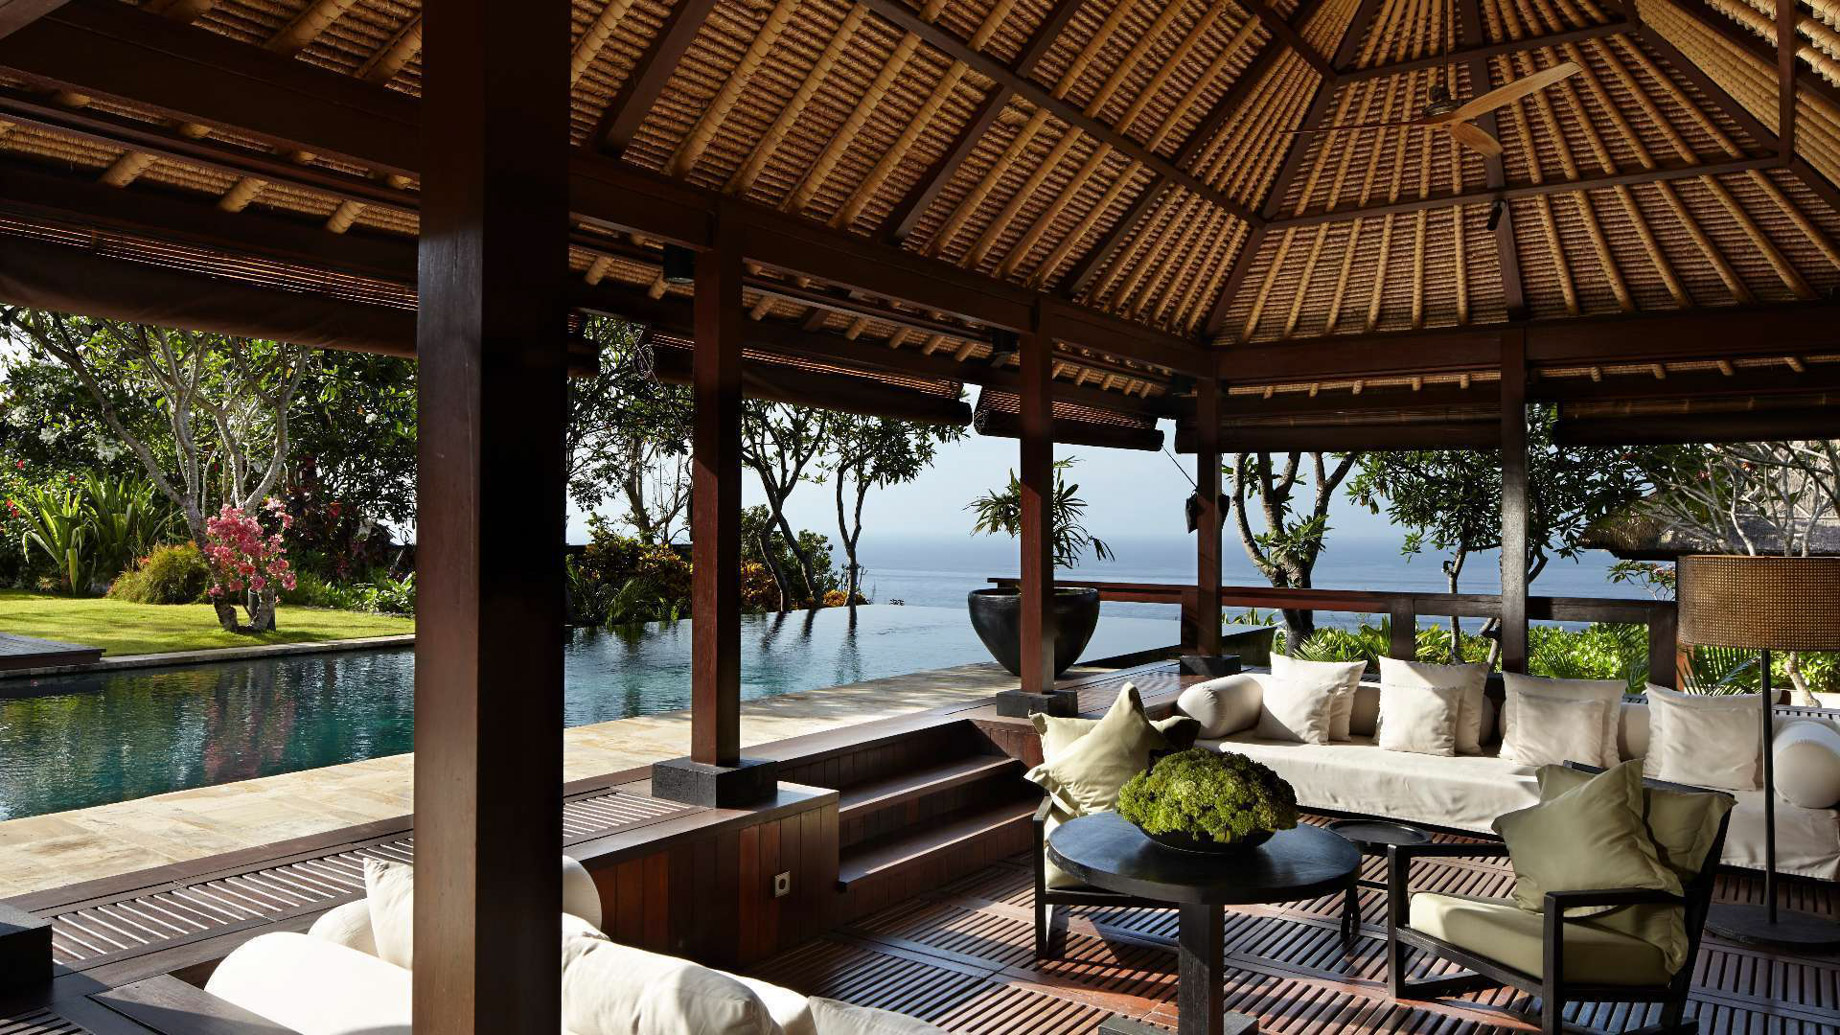 Bvlgari Resort Bali – Uluwatu, Bali, Indonesia – The Bvlgari Villa Ocean View Pool Lounge